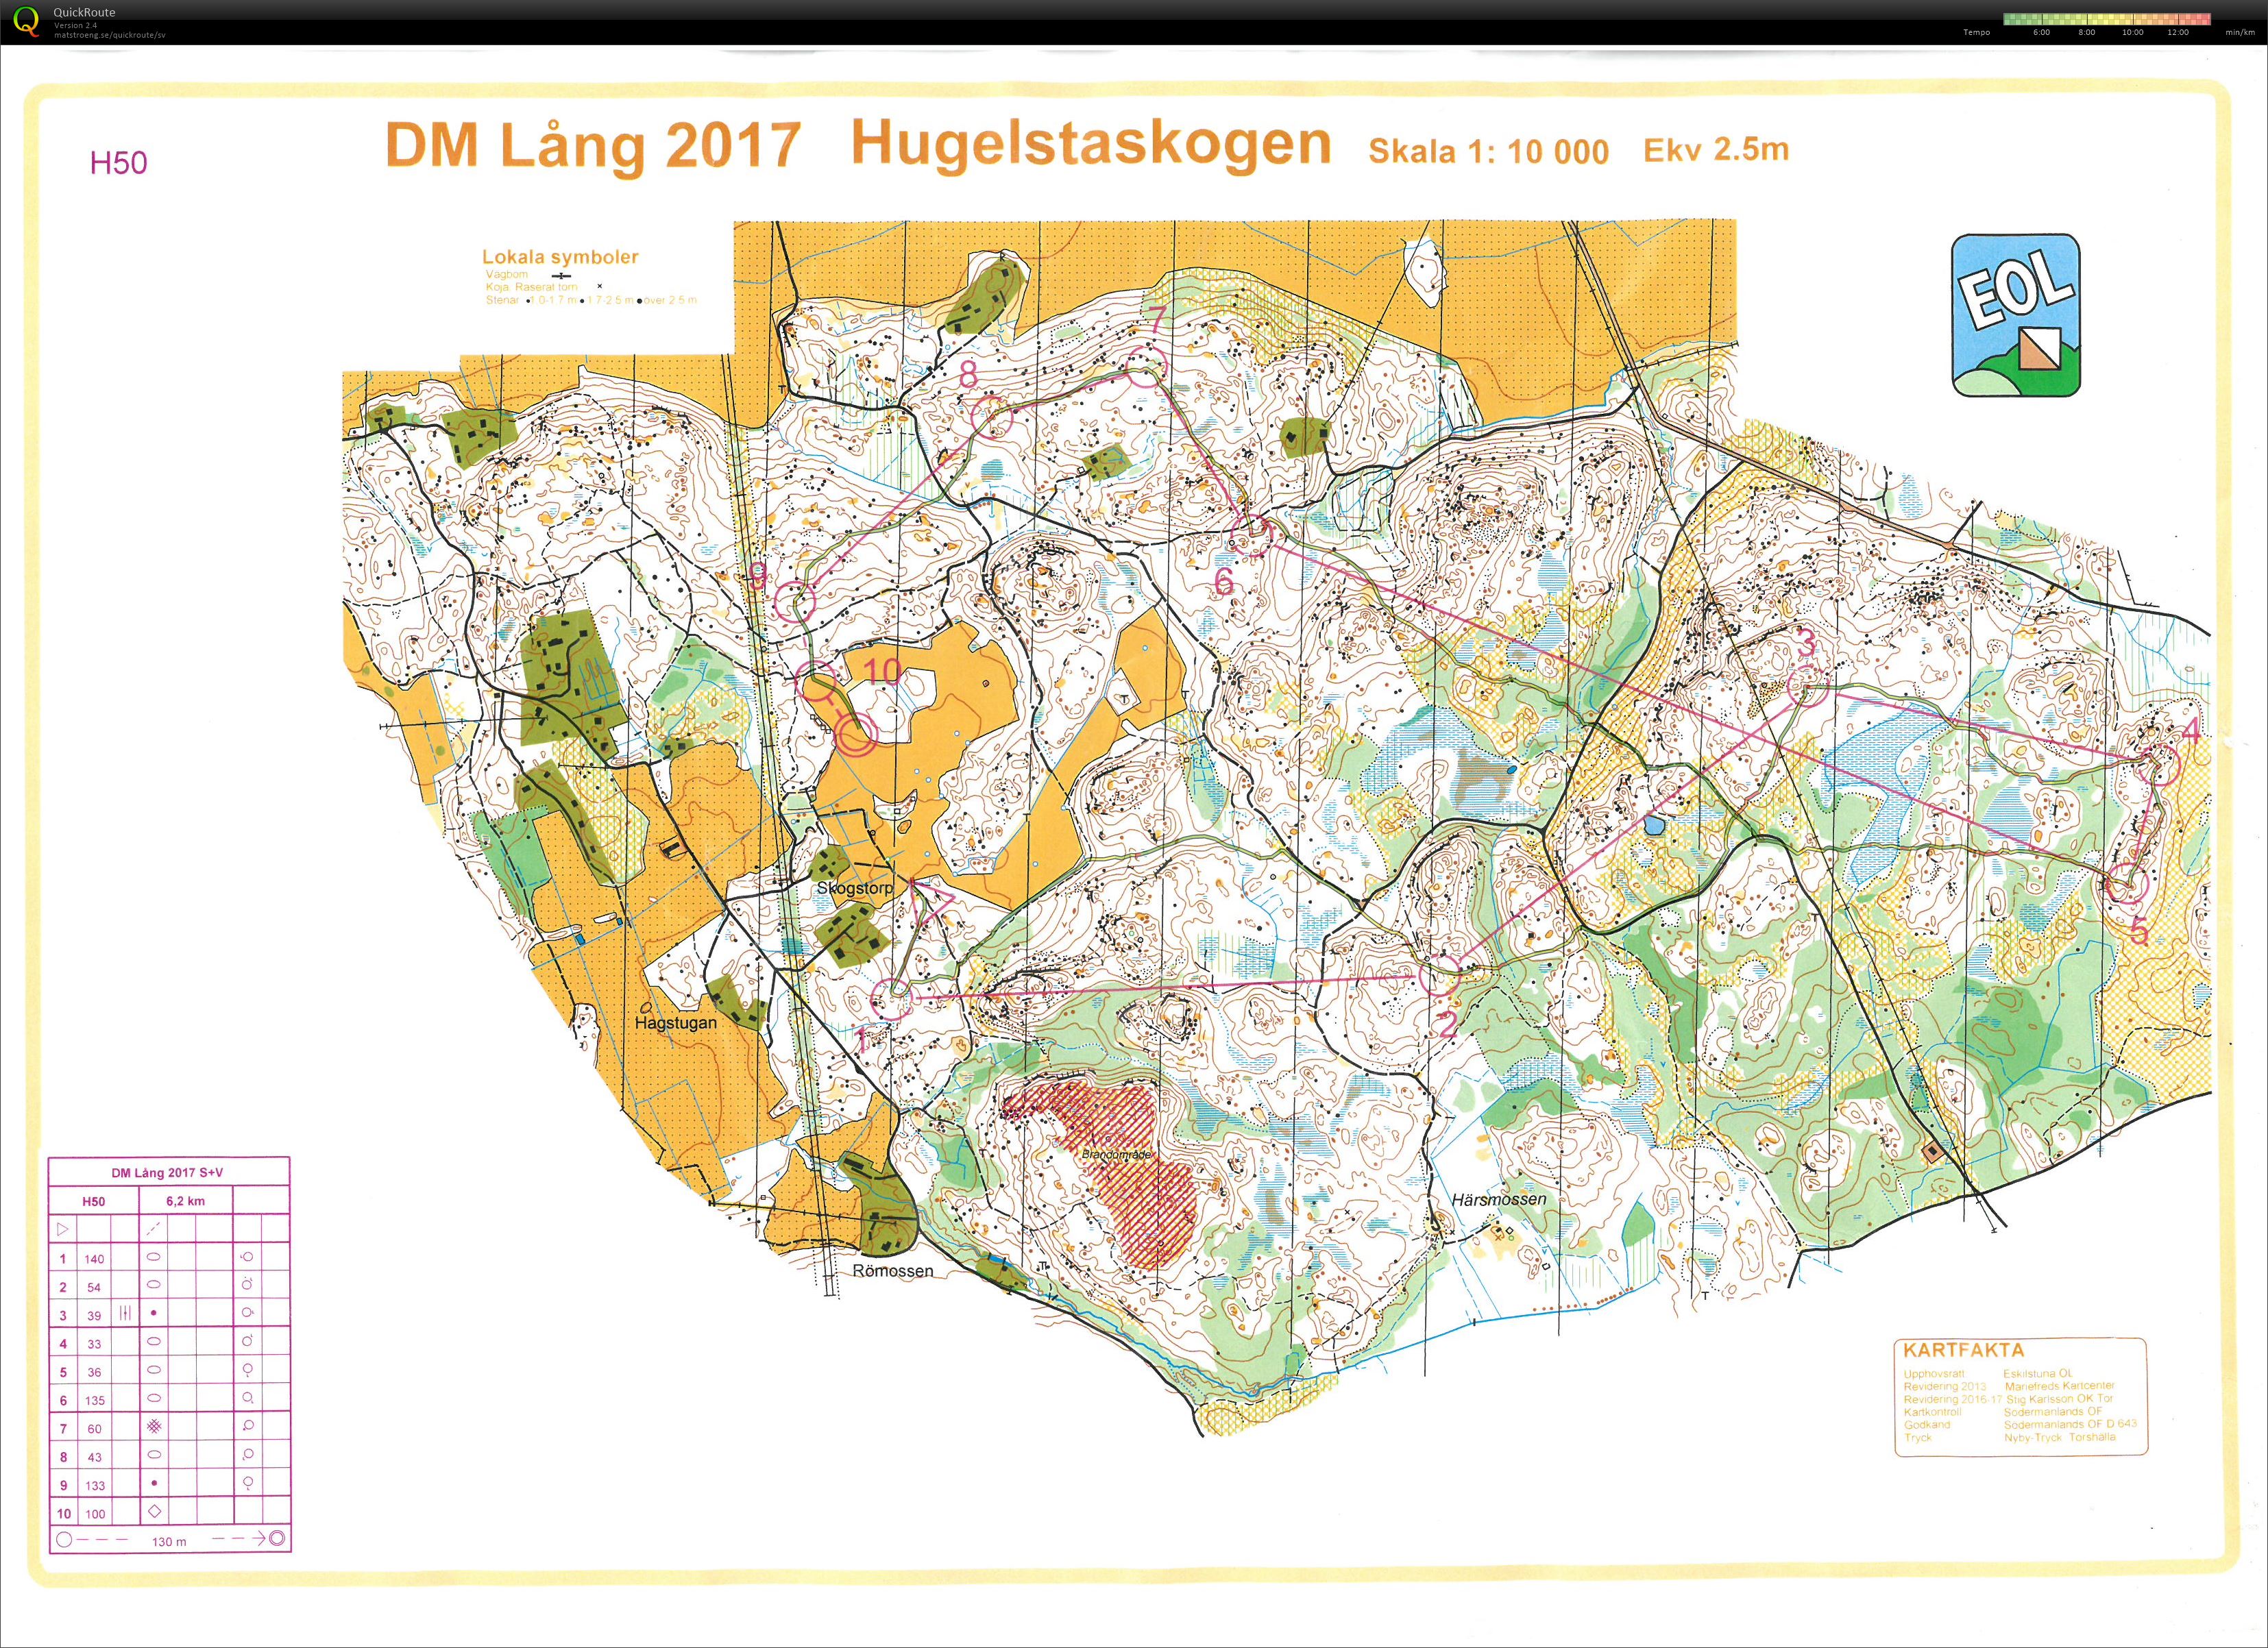 DM-Lång (03-09-2017)